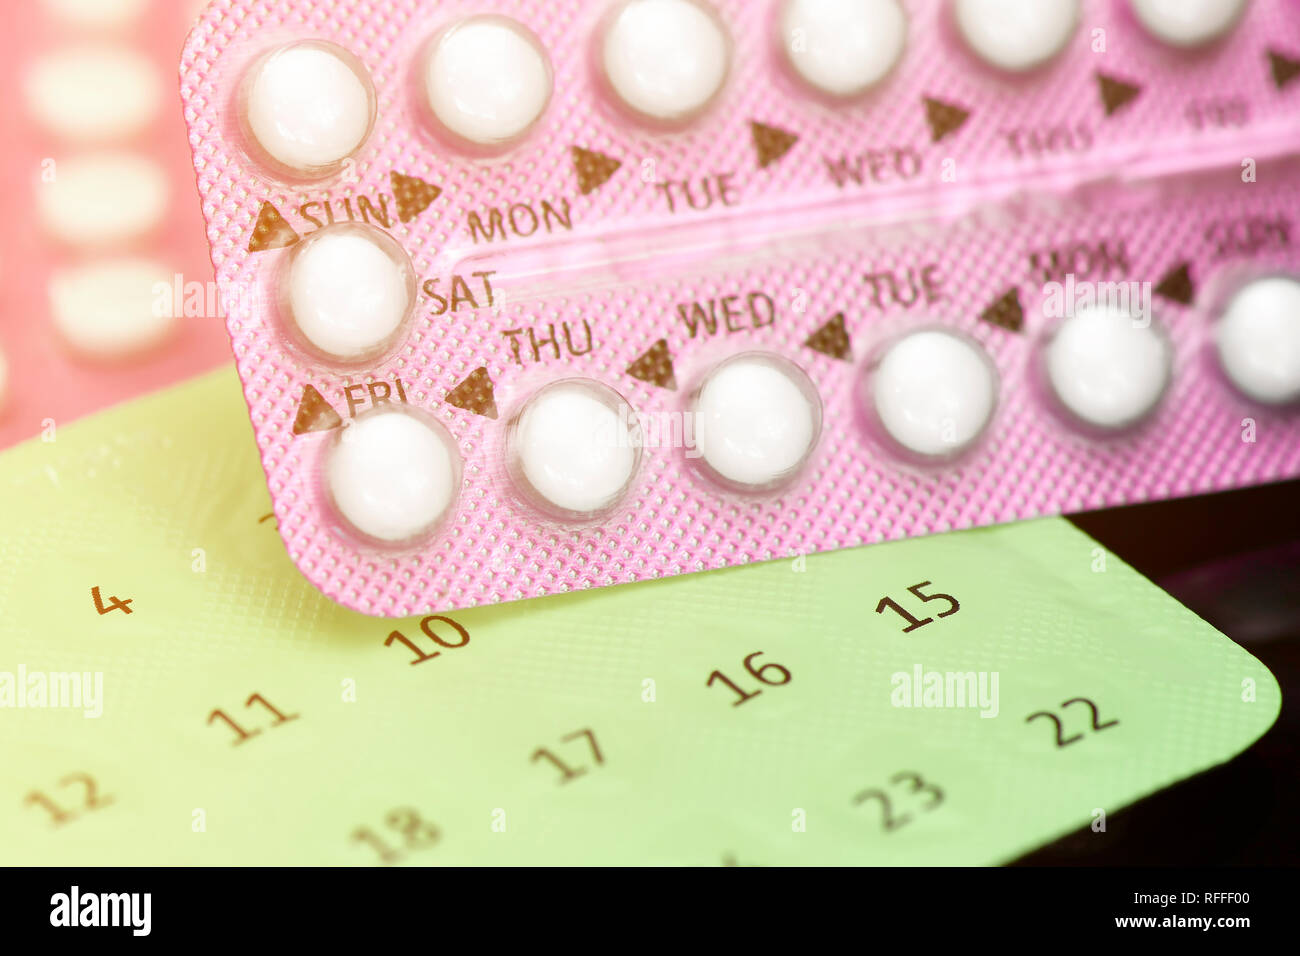 Oral contraceptive pill education concept on dark background. Stock Photo